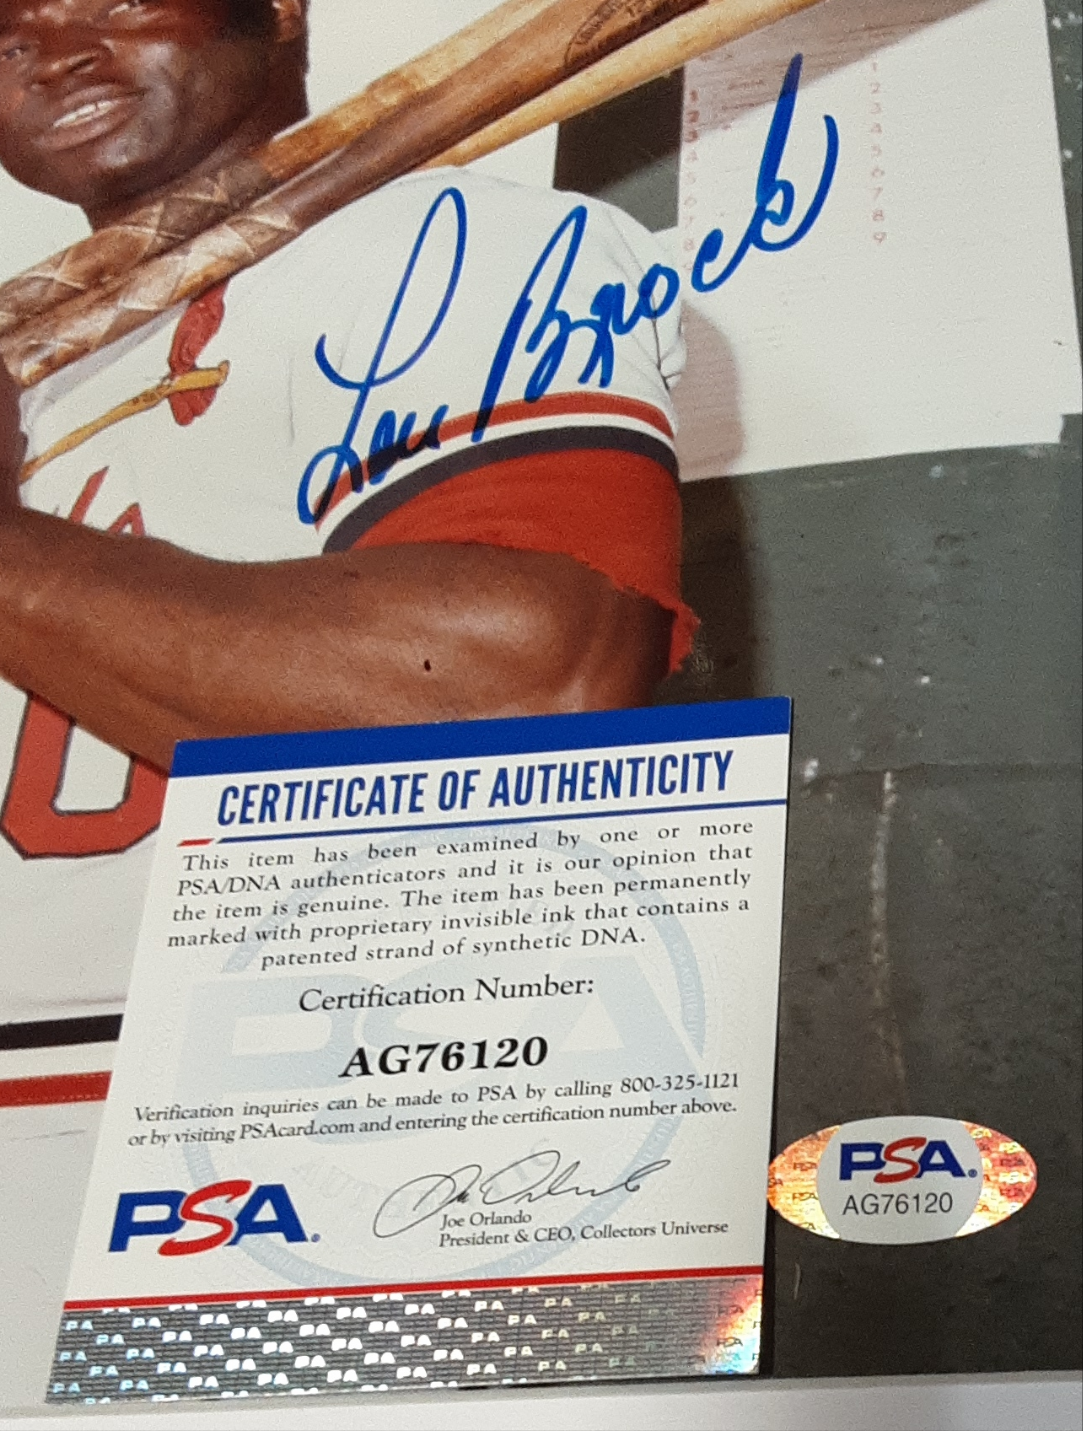 Lou Brock Authentic Signed Framed 8x10 Photo Autographed PSA